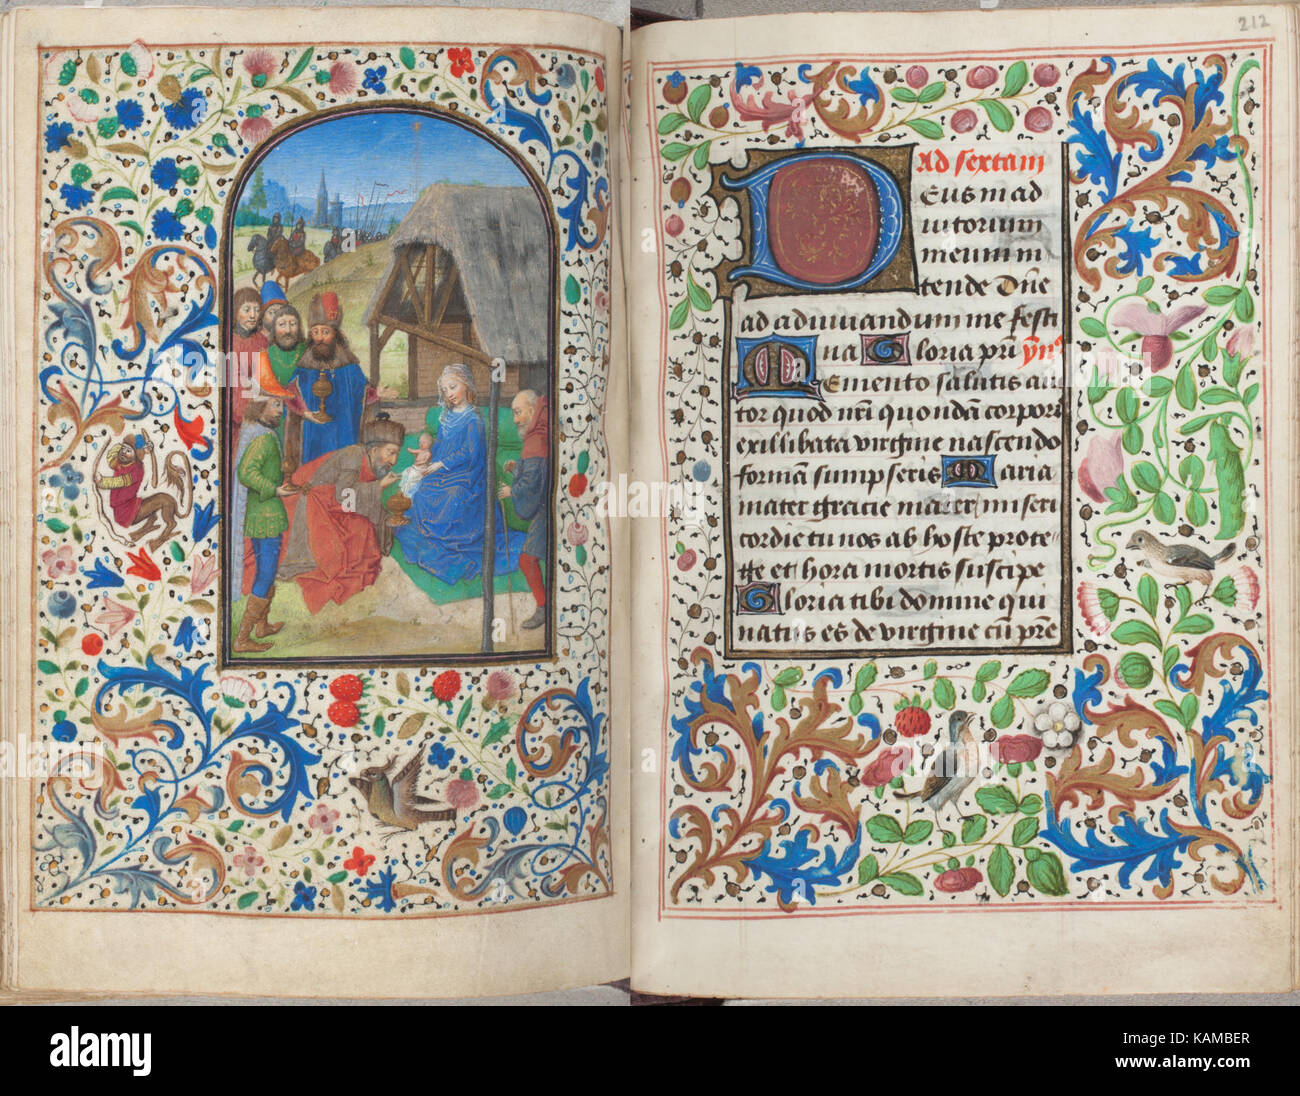 Trivulzio book of hours   KW SMC 1   folios 211v (left) and 212r (right) Stock Photo